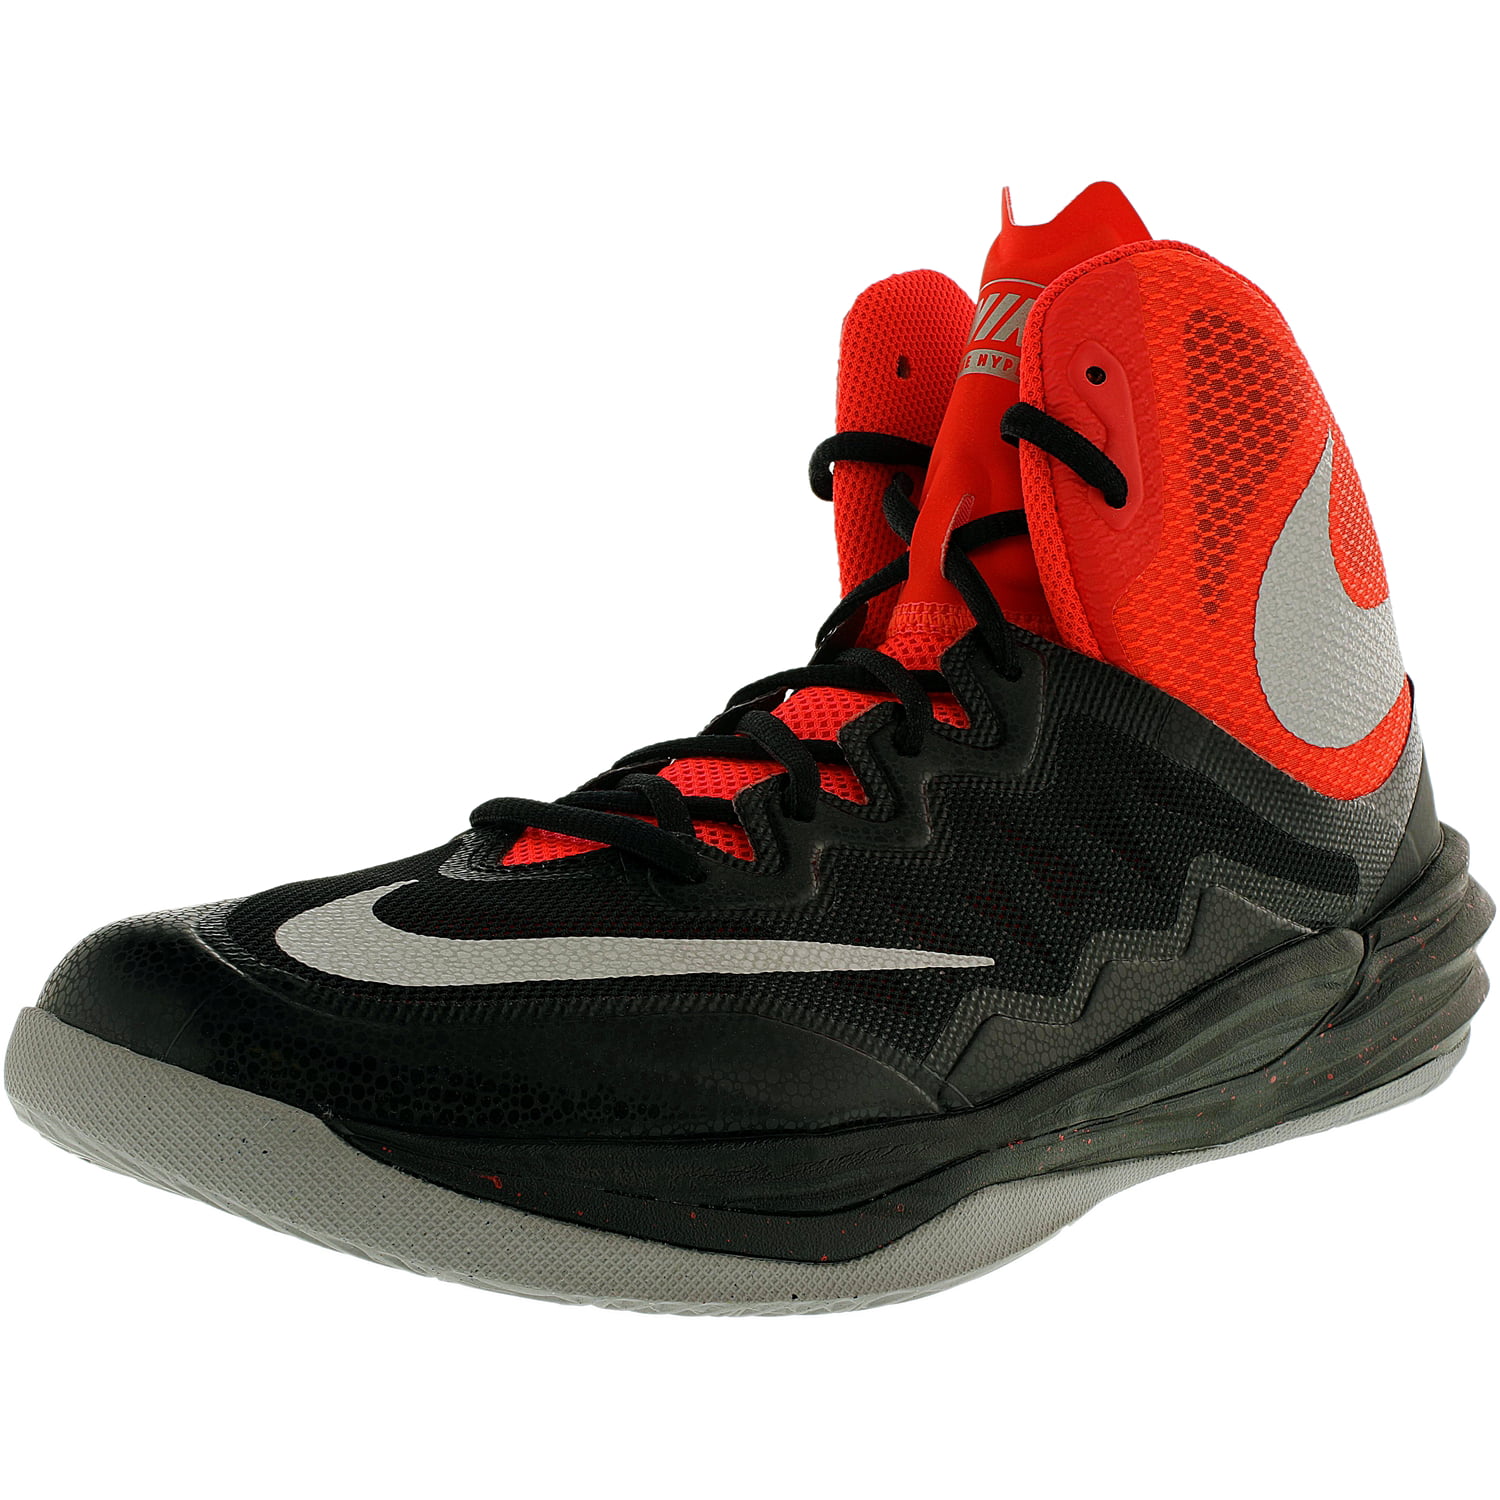 Nike Men's Prime Hype Df Ii Black/Reflect Silver/Bright Crimson High-Top Basketball - 9M Walmart.com